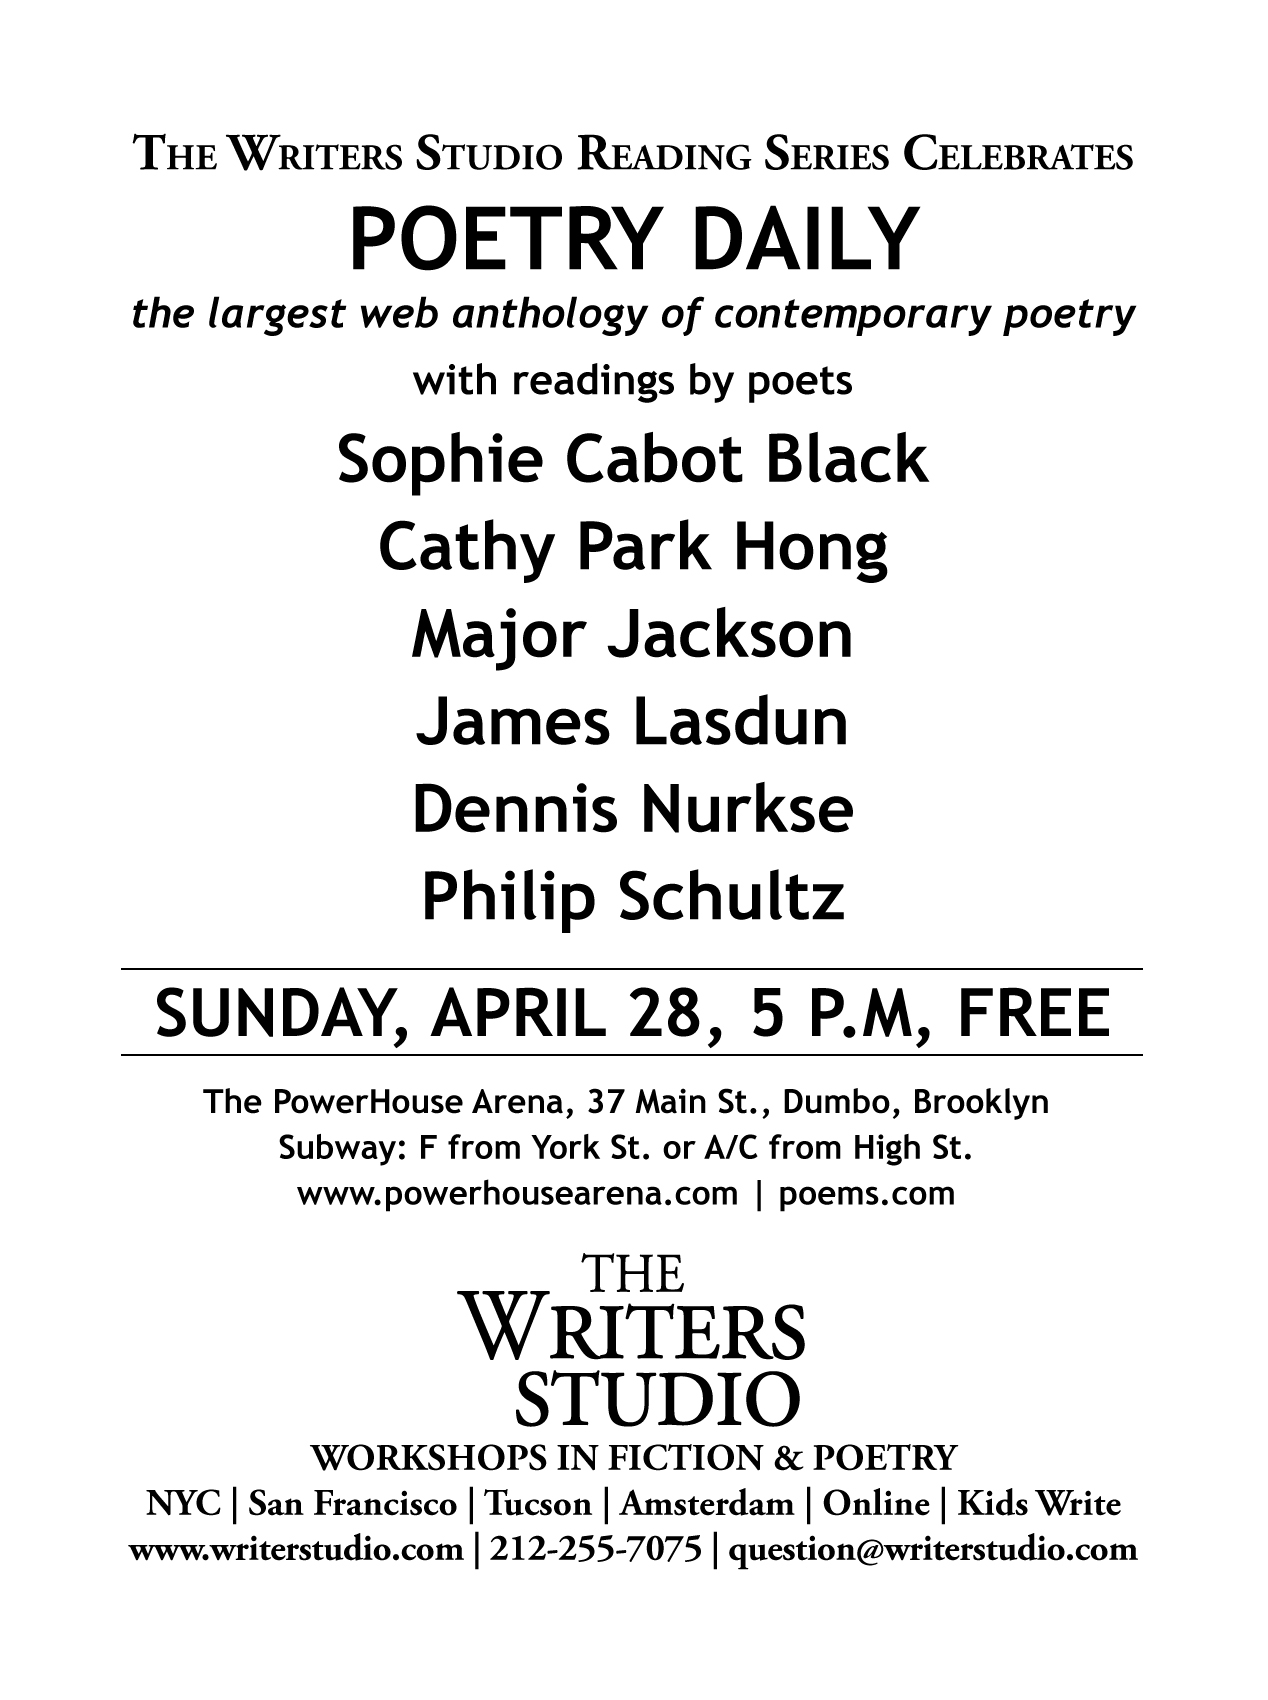 The Writers Studio Reading Series Celebrates: Poetry Daily 